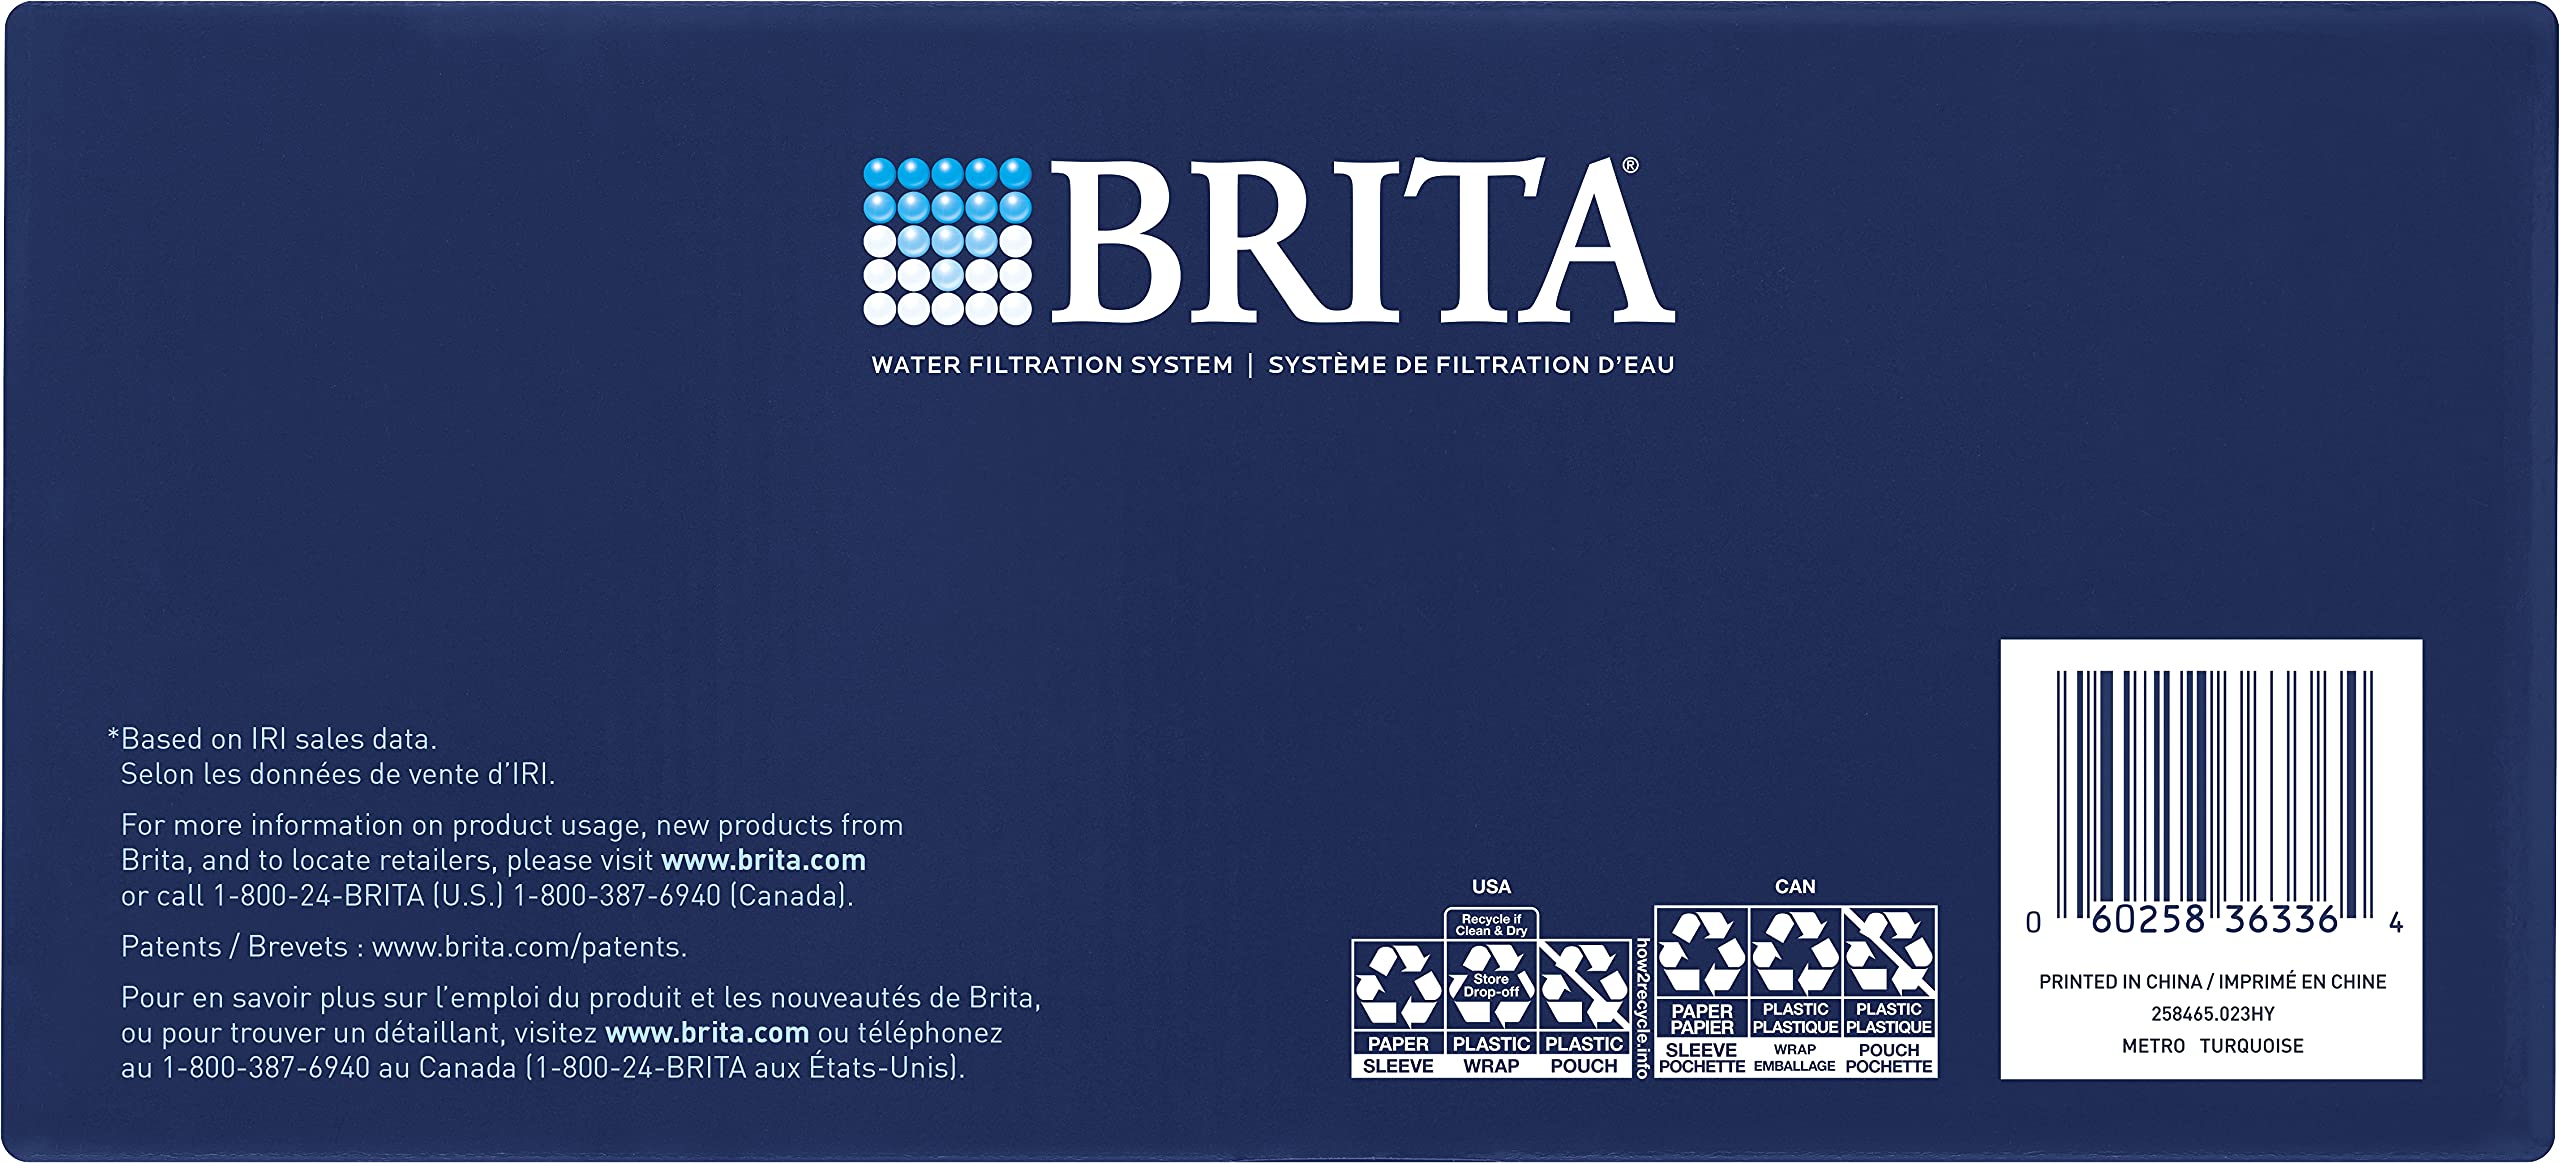 Brita Small 6 Cup Denali Water Filter Pitcher with 1 Brita Standard Filter, Made Without BPA, Transparent Teal